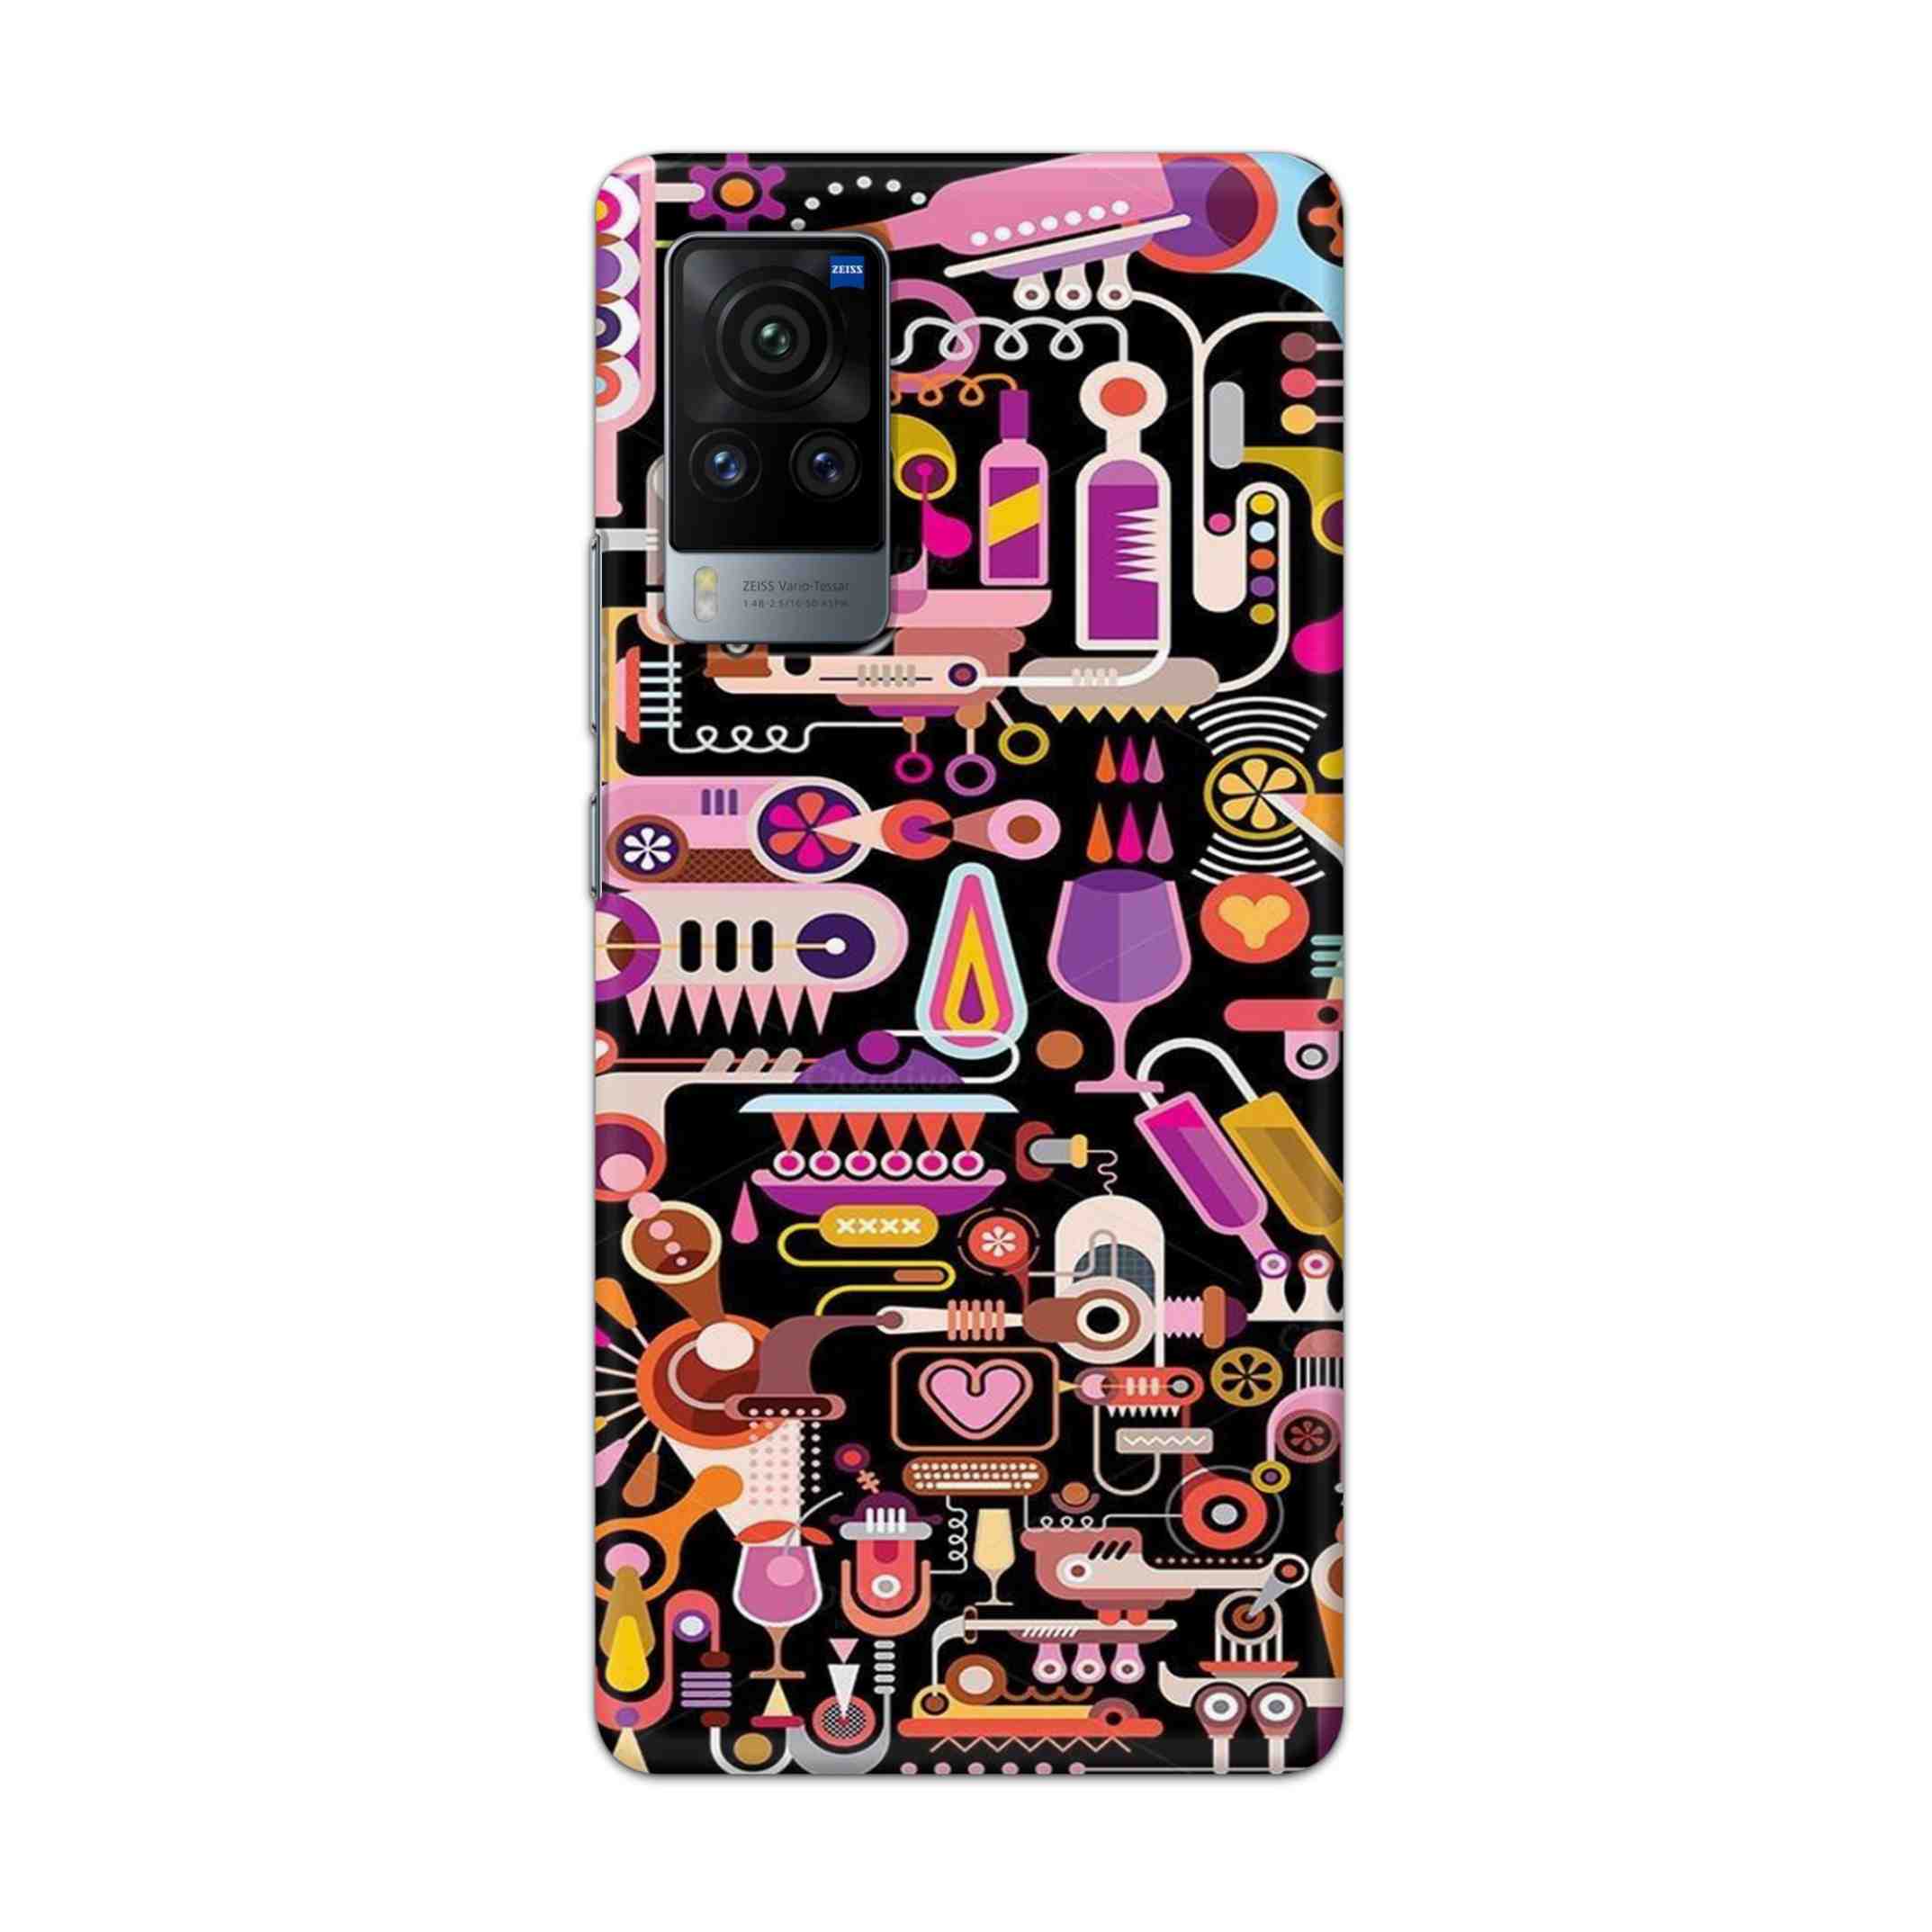 Buy Lab Art Hard Back Mobile Phone Case Cover For Vivo X60 Pro Online